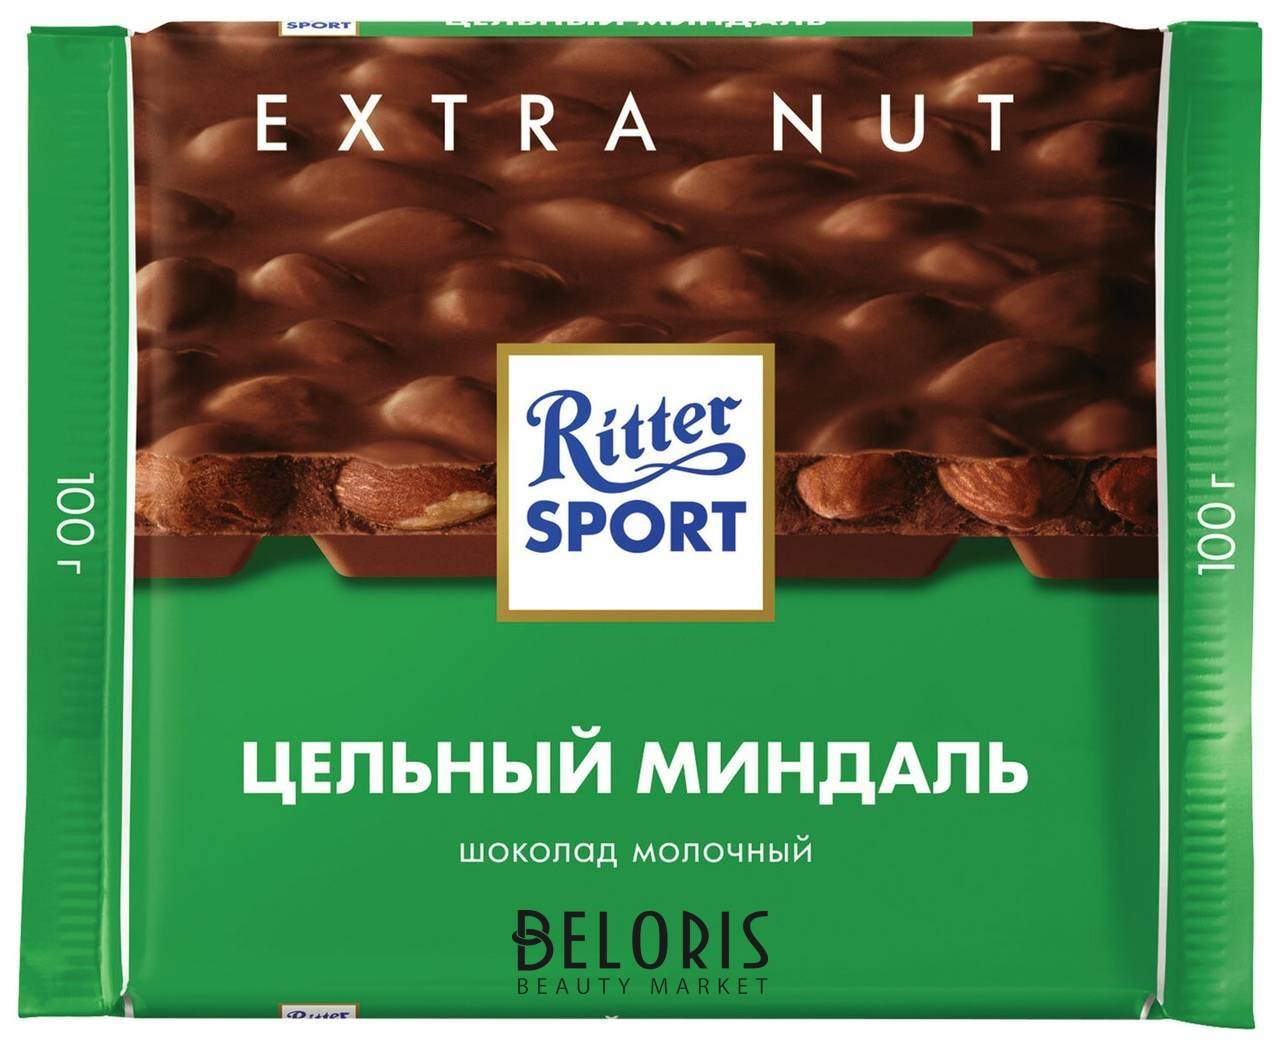 Шоколад Ritter Sport Extra Nut, молочный, с цельным миндалем, 100 г, германия, 7036 Ritter sport